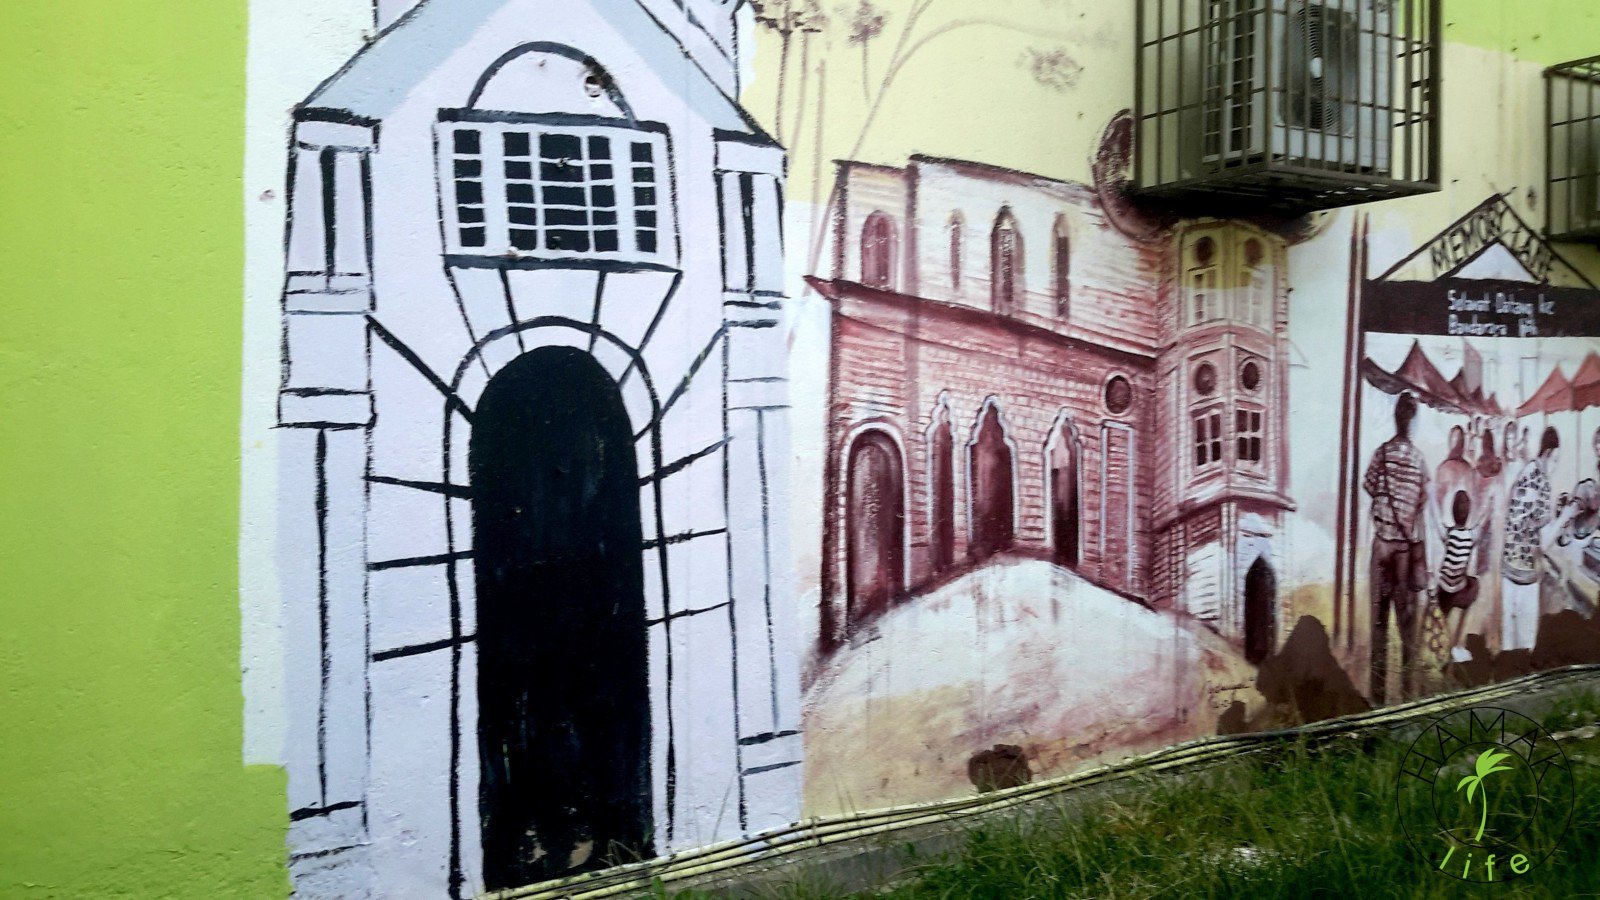 Ipoh street art along Jalan Sultan Iskandar